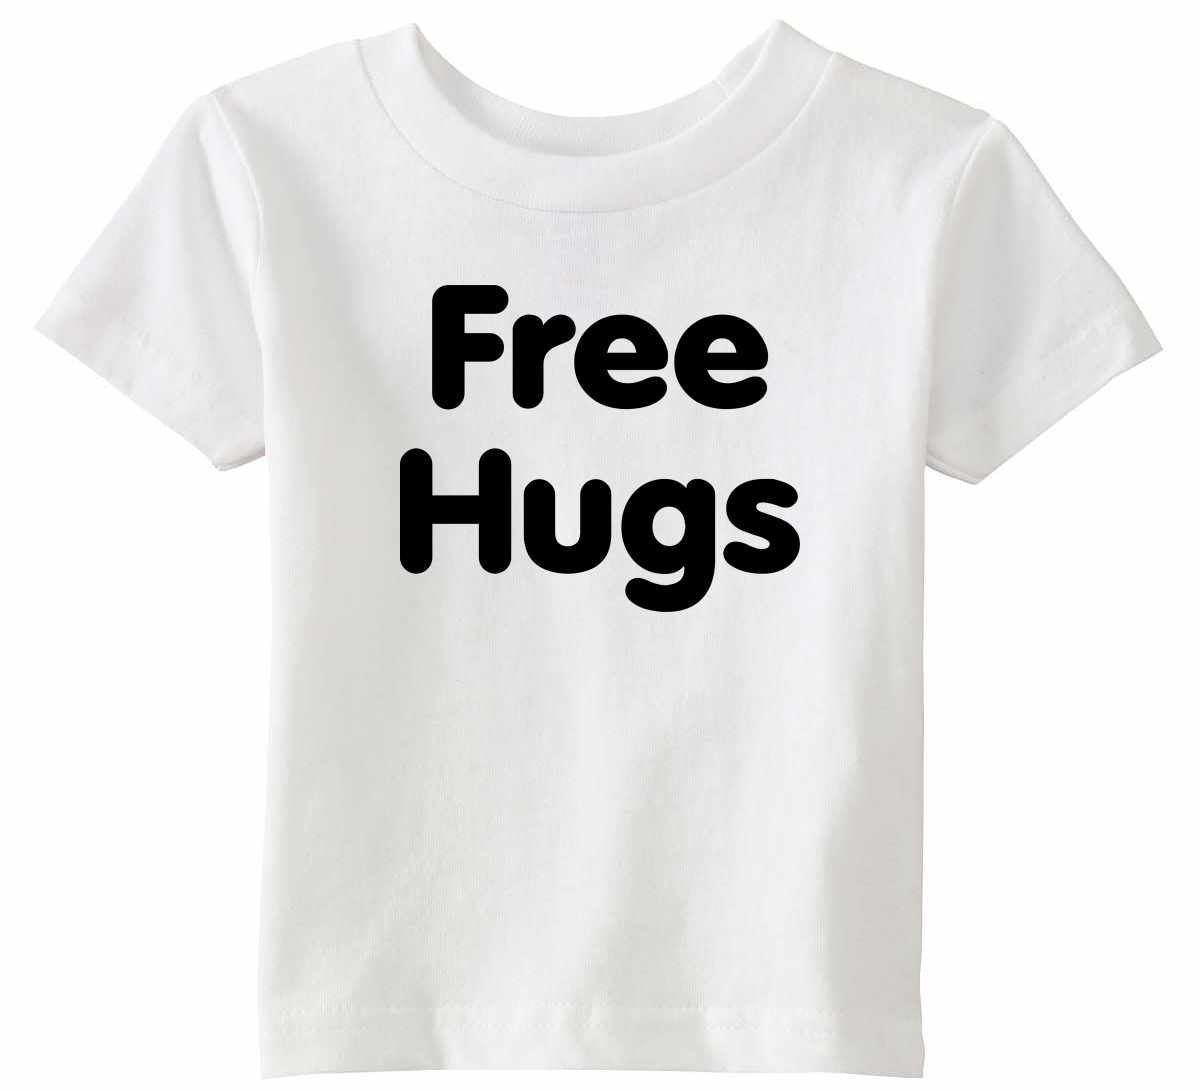 FREE HUGS Infant/Toddler  (#572-7)